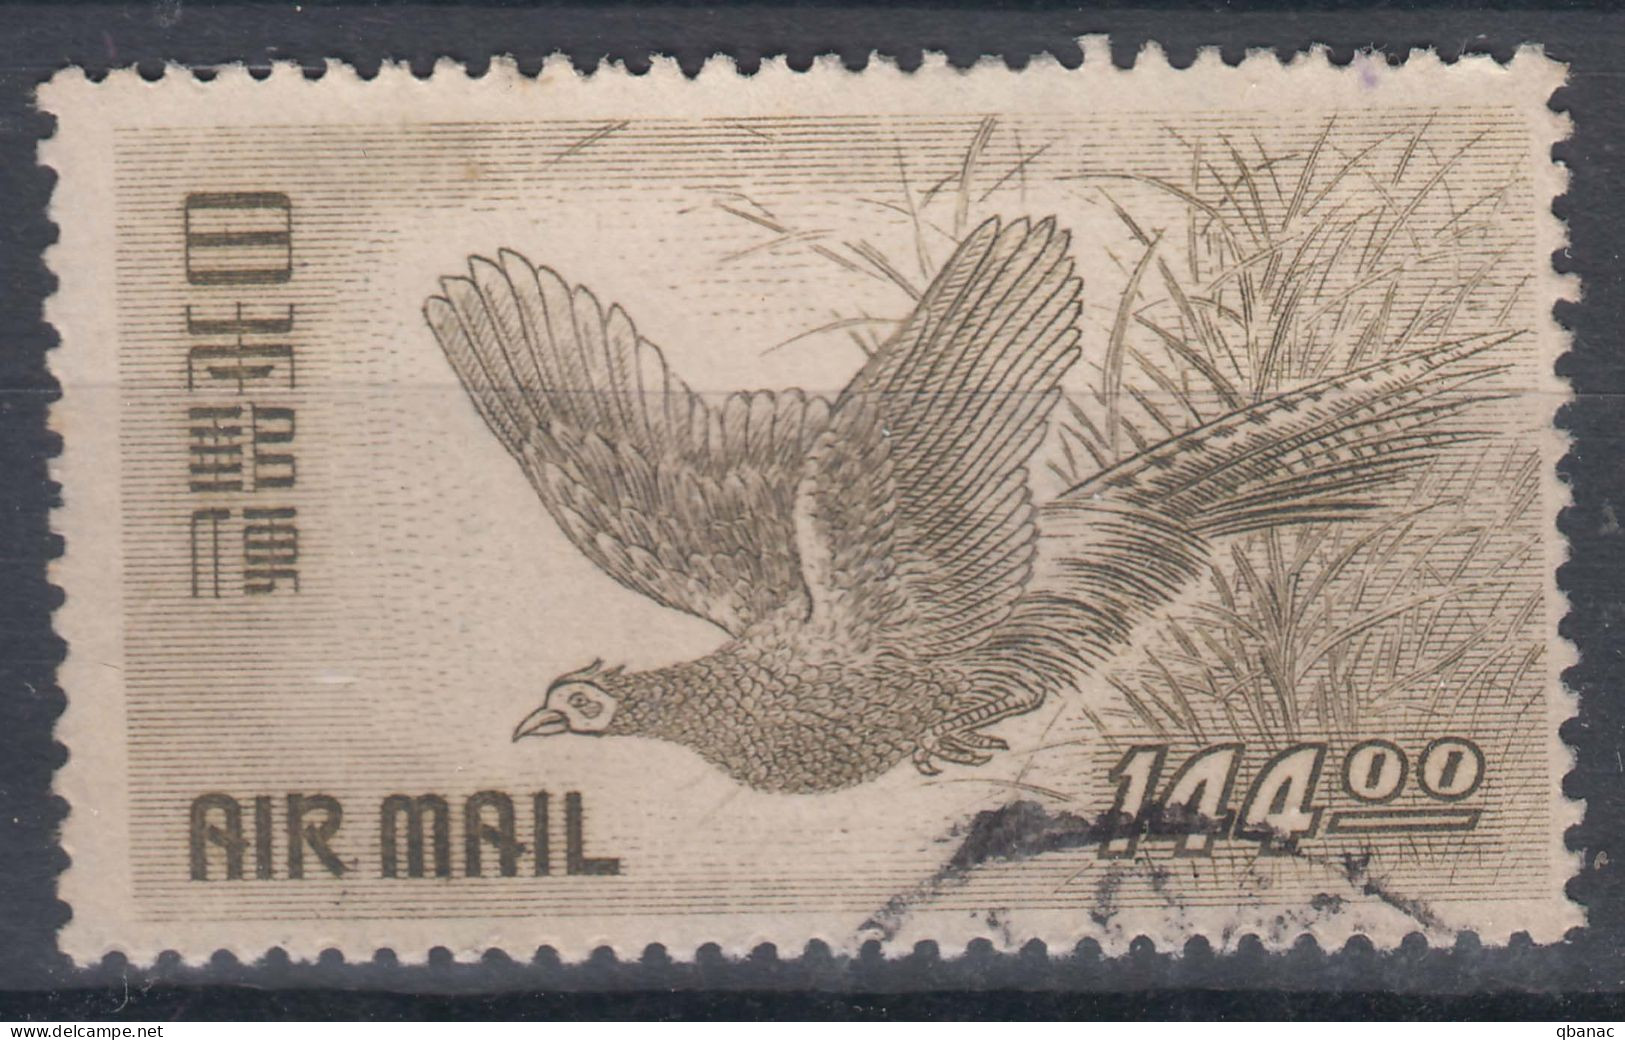 Japan 1950 Birds Airmail Mi#496 Used - Oblitérés